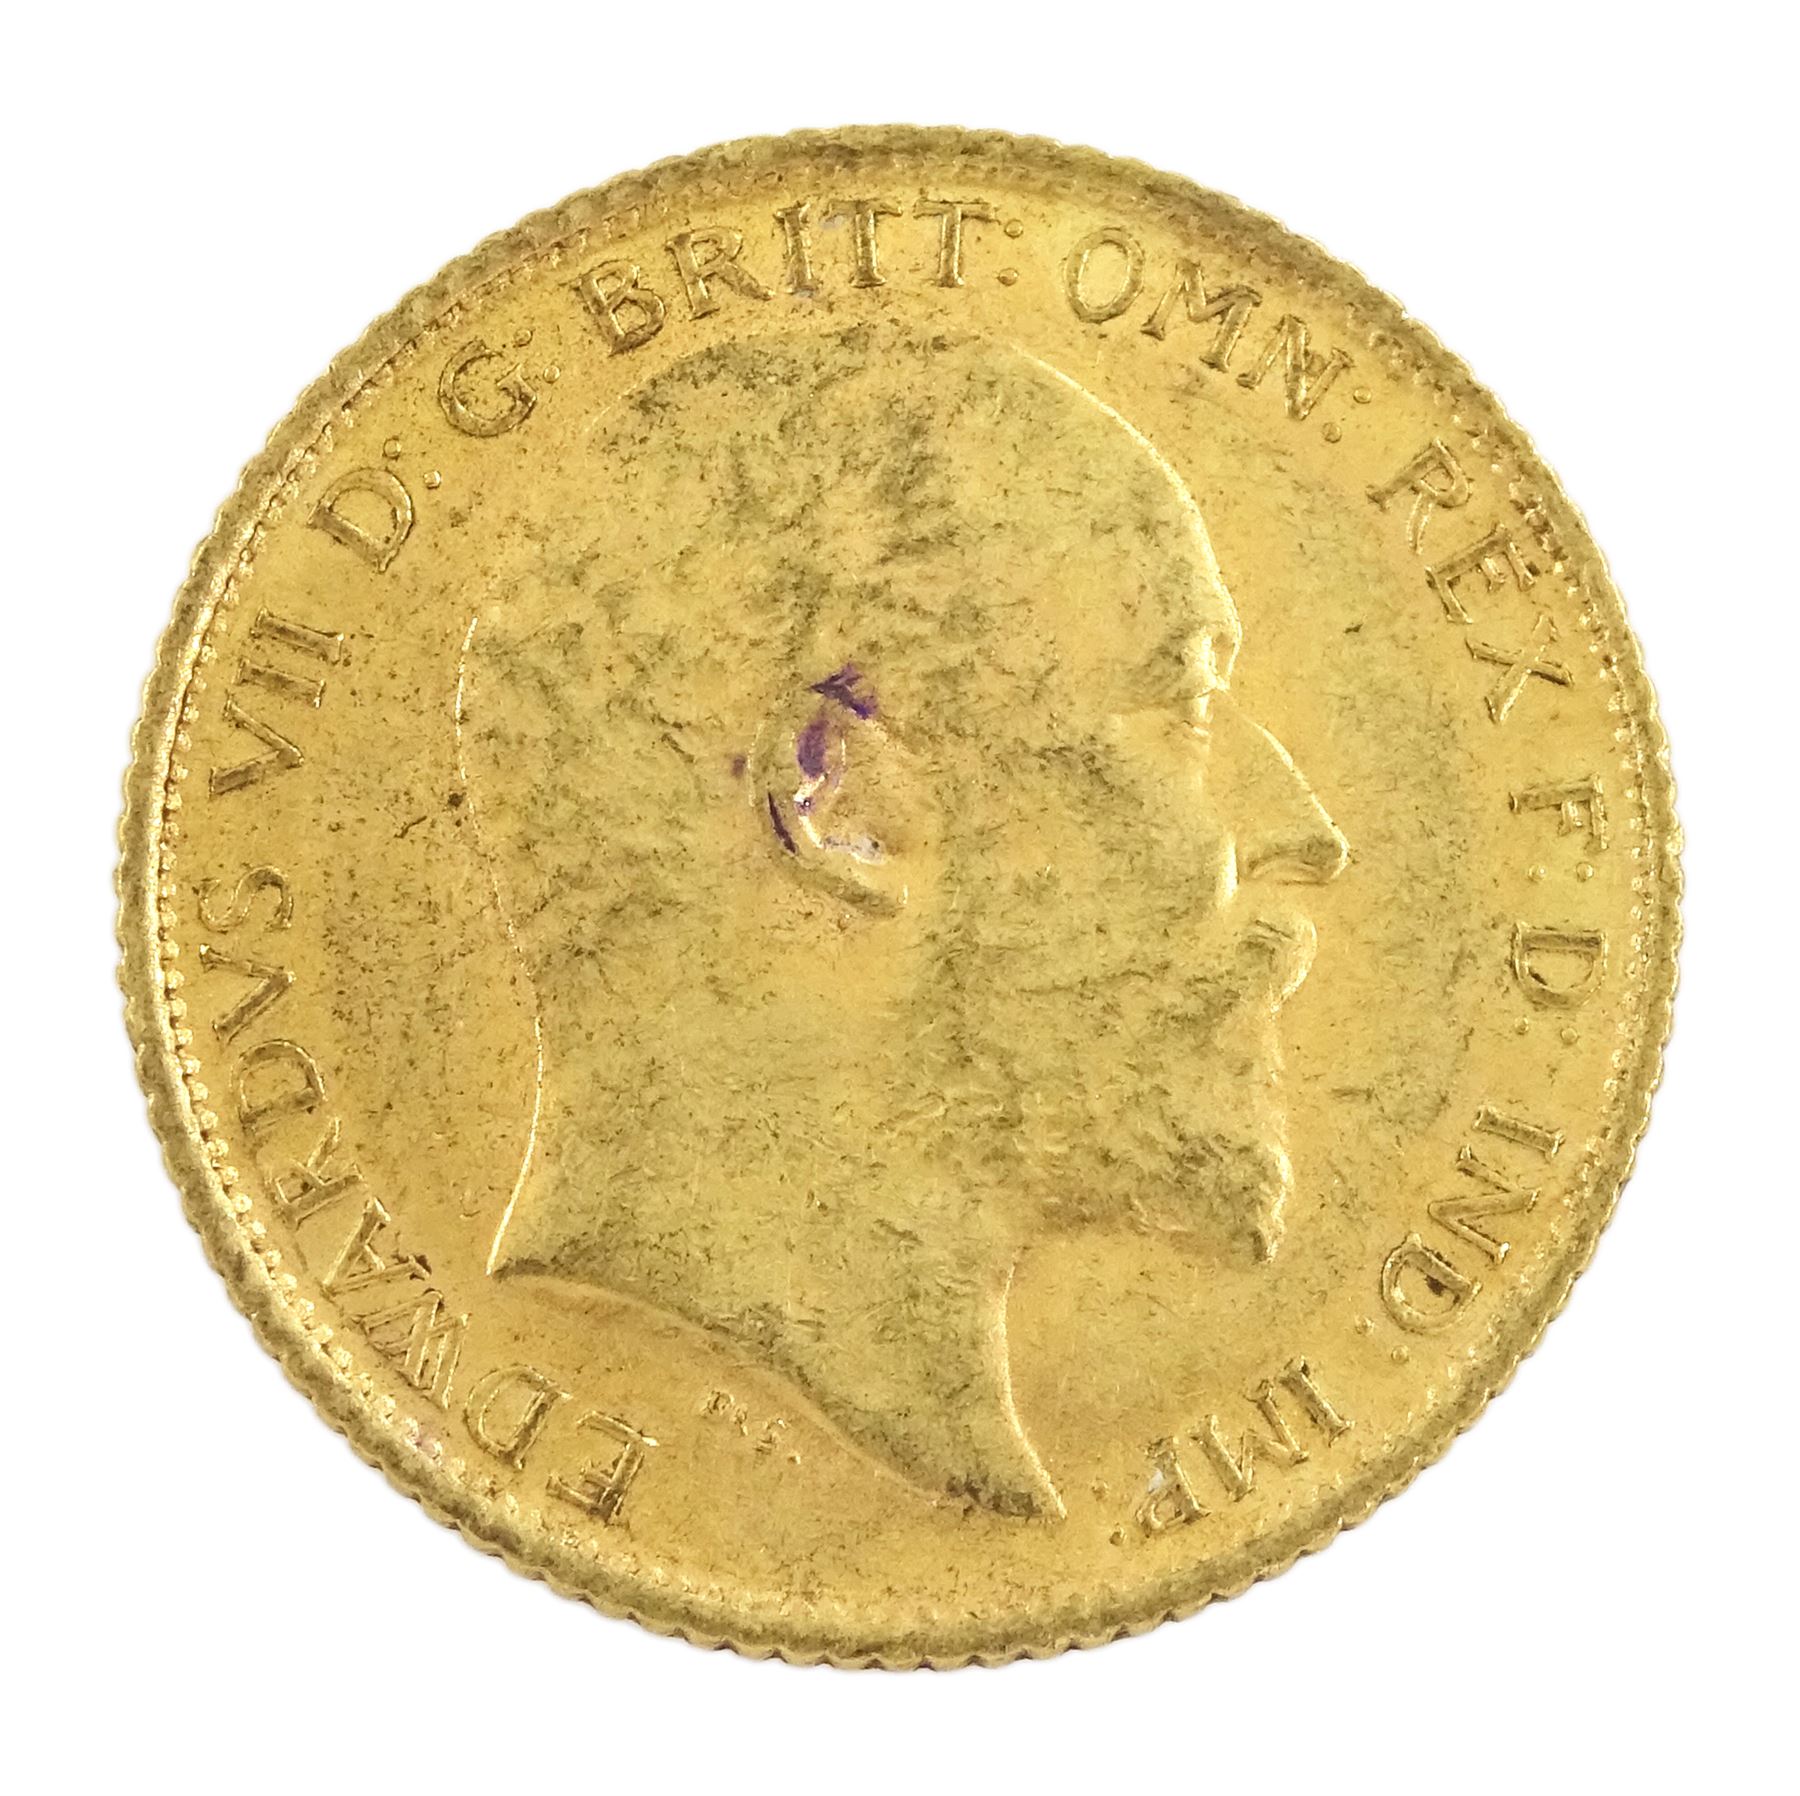 King Edward VII 1908 gold half sovereign coin